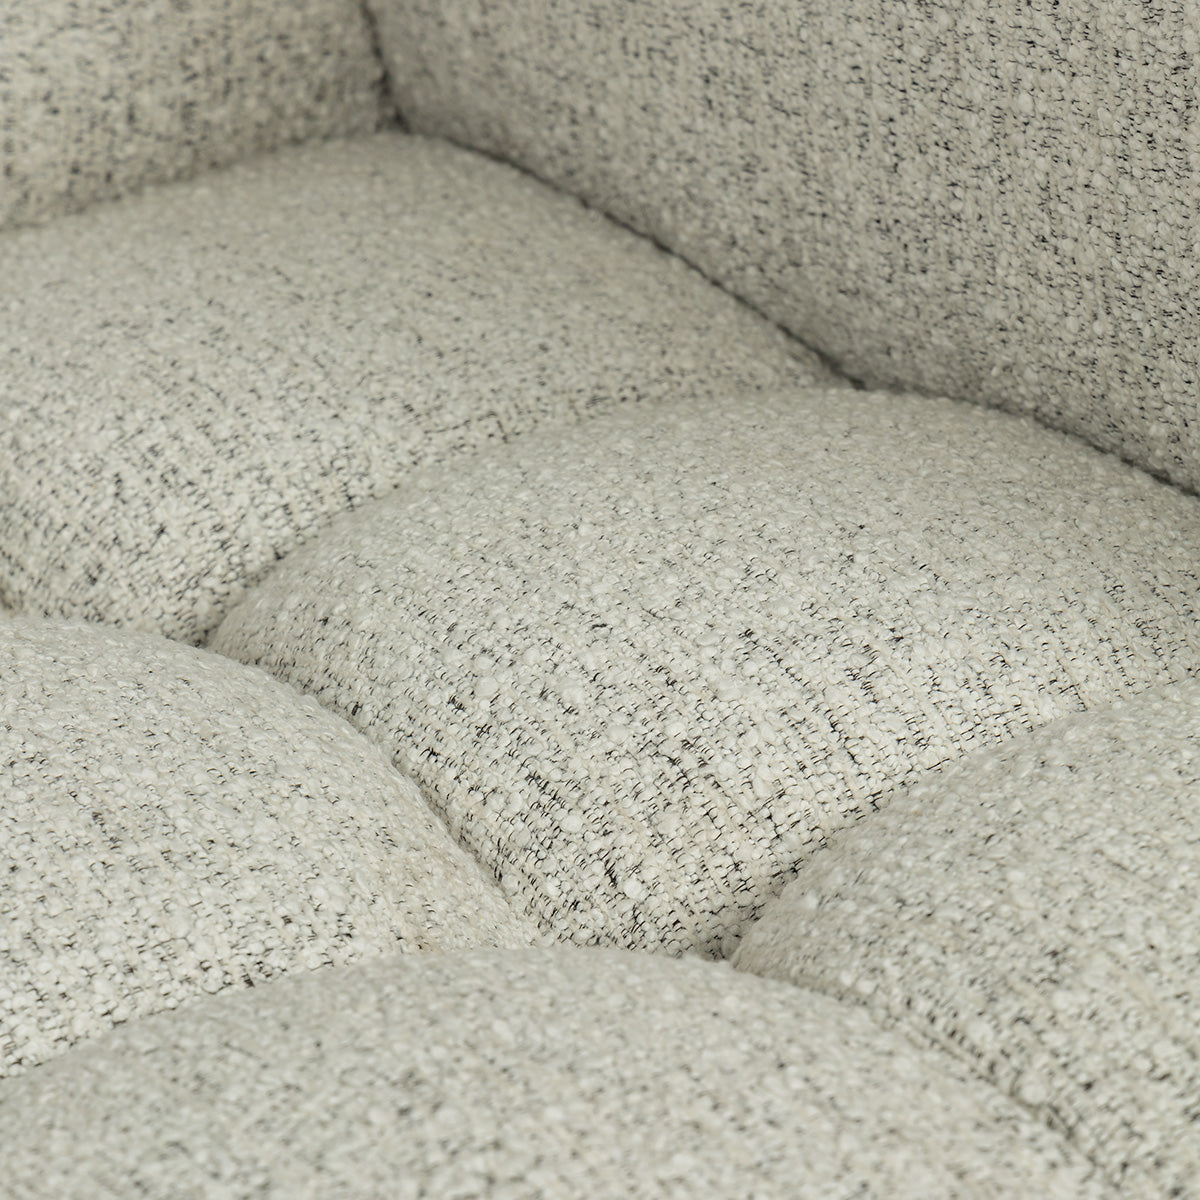 Delano 2 Sofa in White Textured Linen